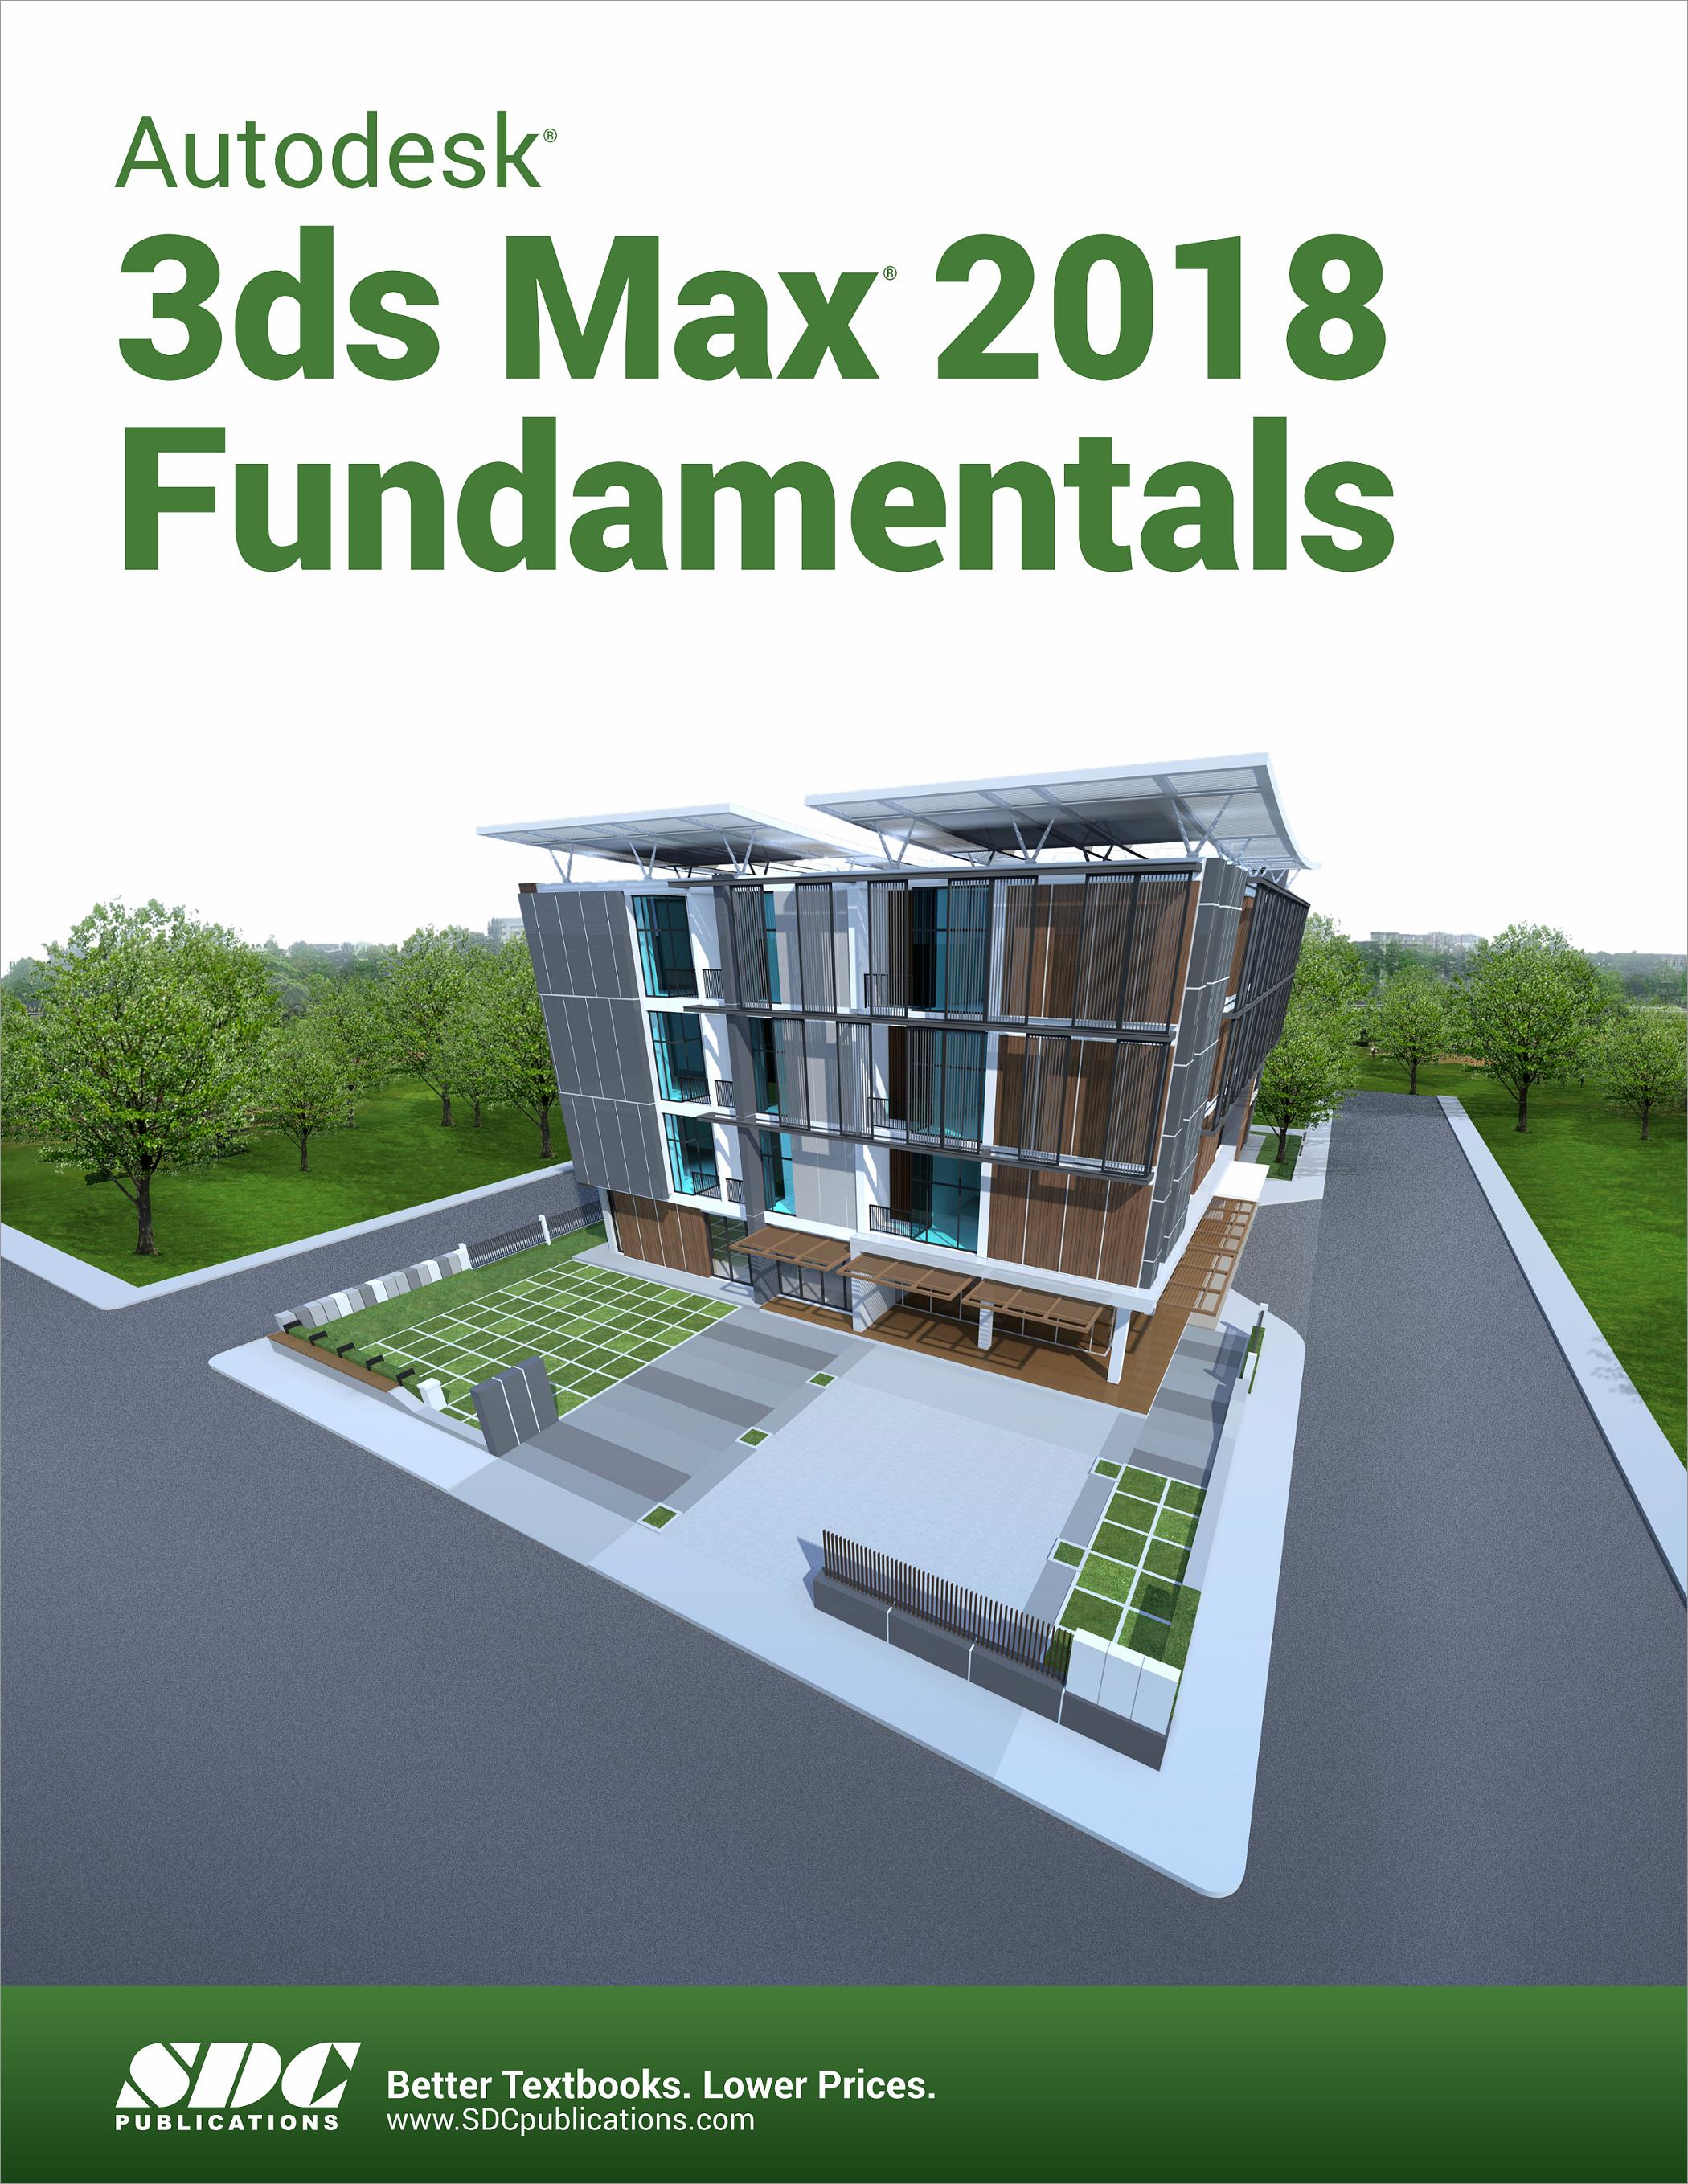 Autodesk 3ds 2018 Fundamentals, 9781630571092 SDC Publications